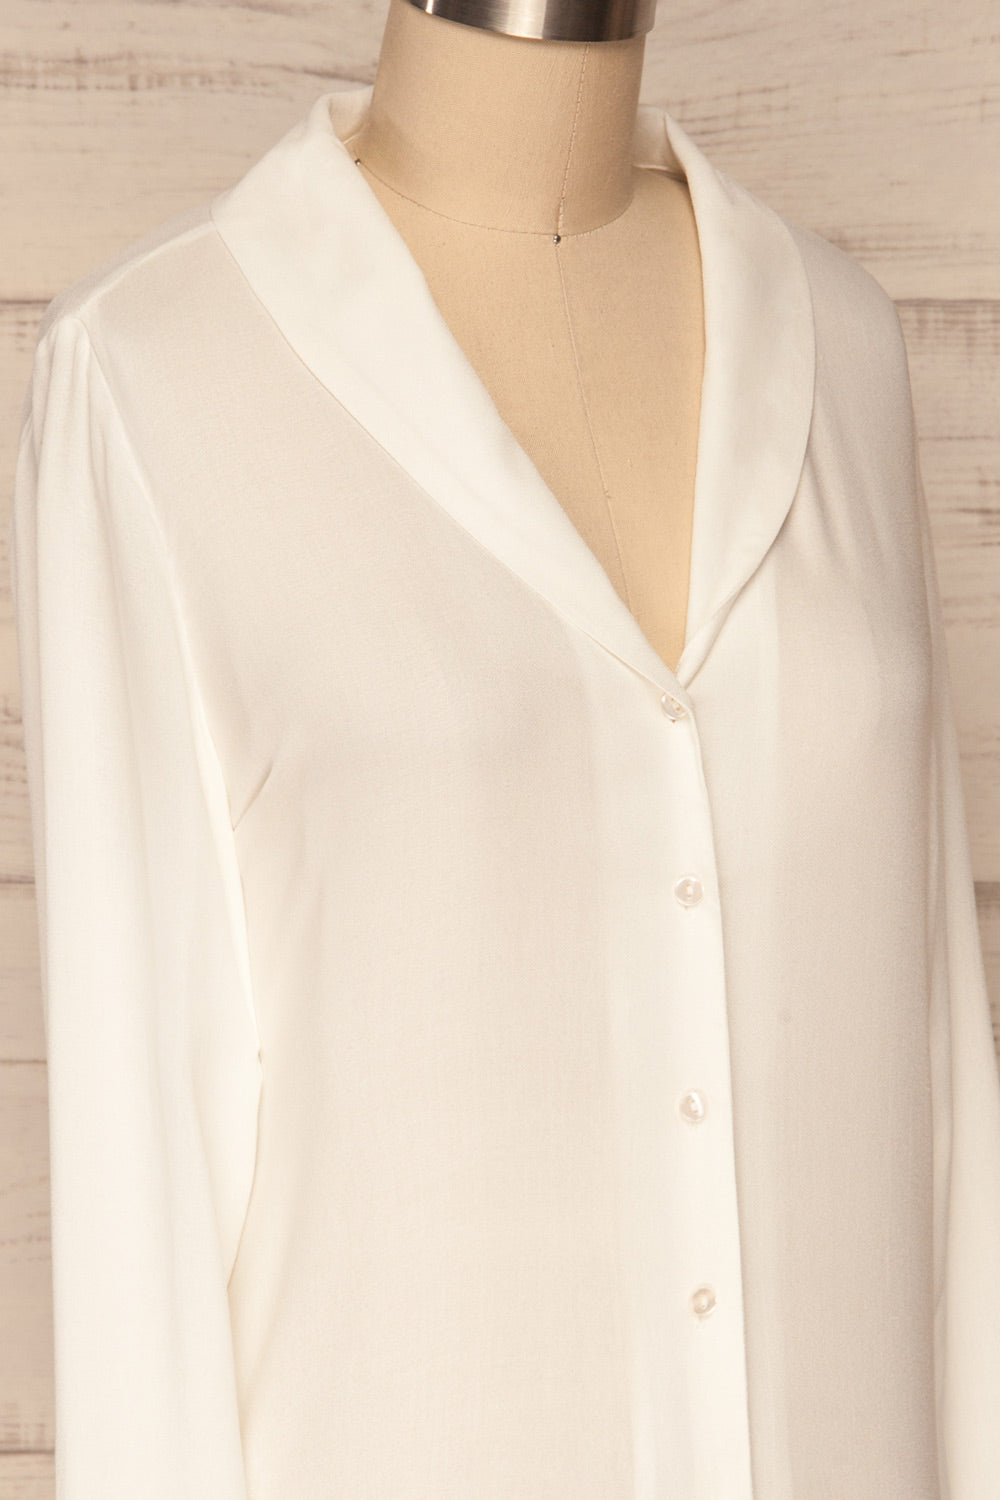 Clonmel Blanc White V-Neck Shirt side close up | La Petite Garçonne